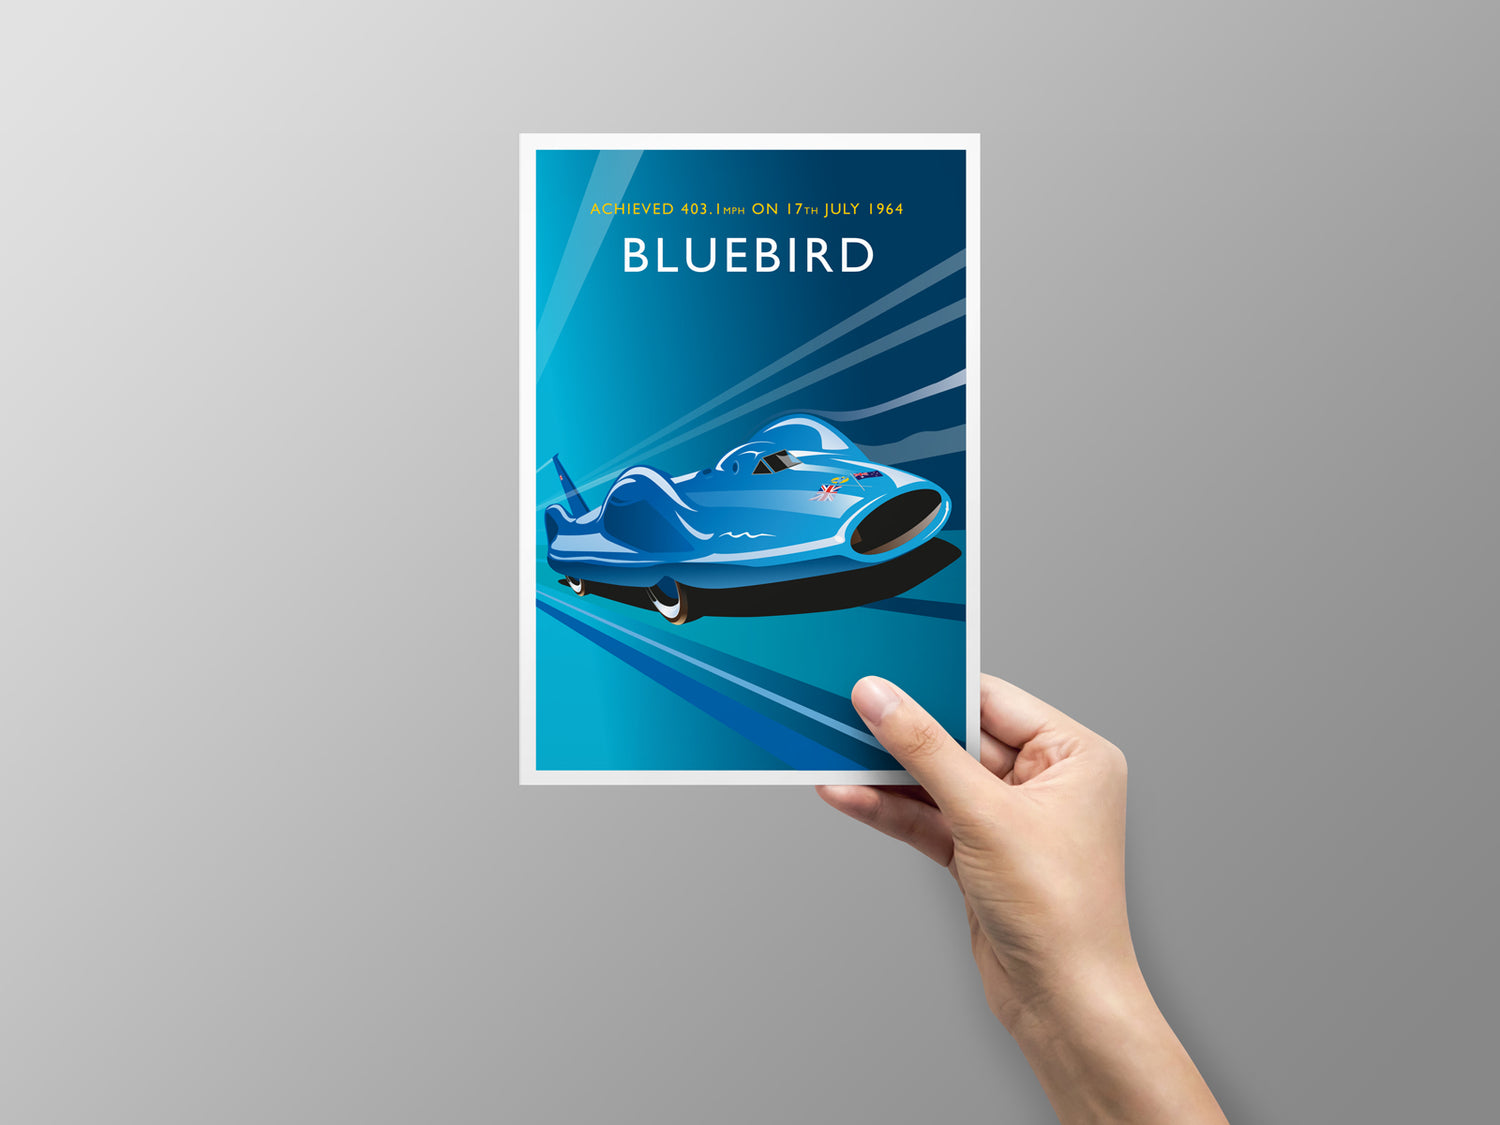 The Bluebird Greeting Card